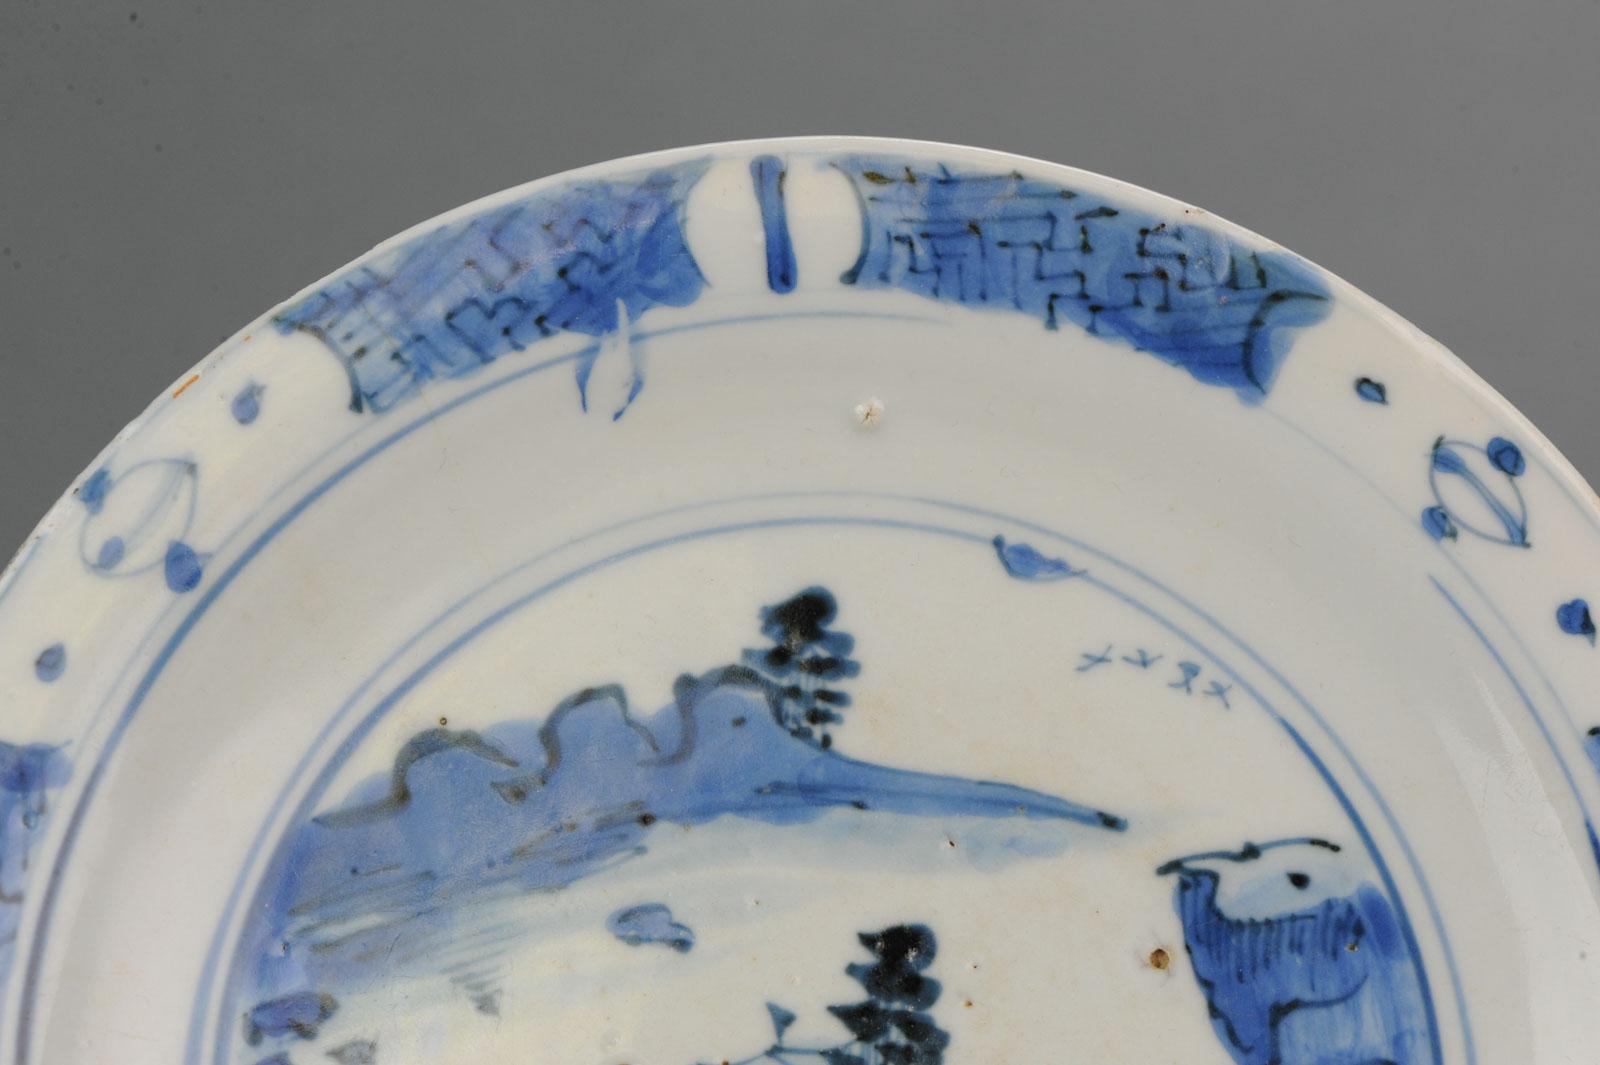 Chinese Antique Japanese Shoki Imari Plate circa 1620-1630 Arita Japan Porcelain For Sale